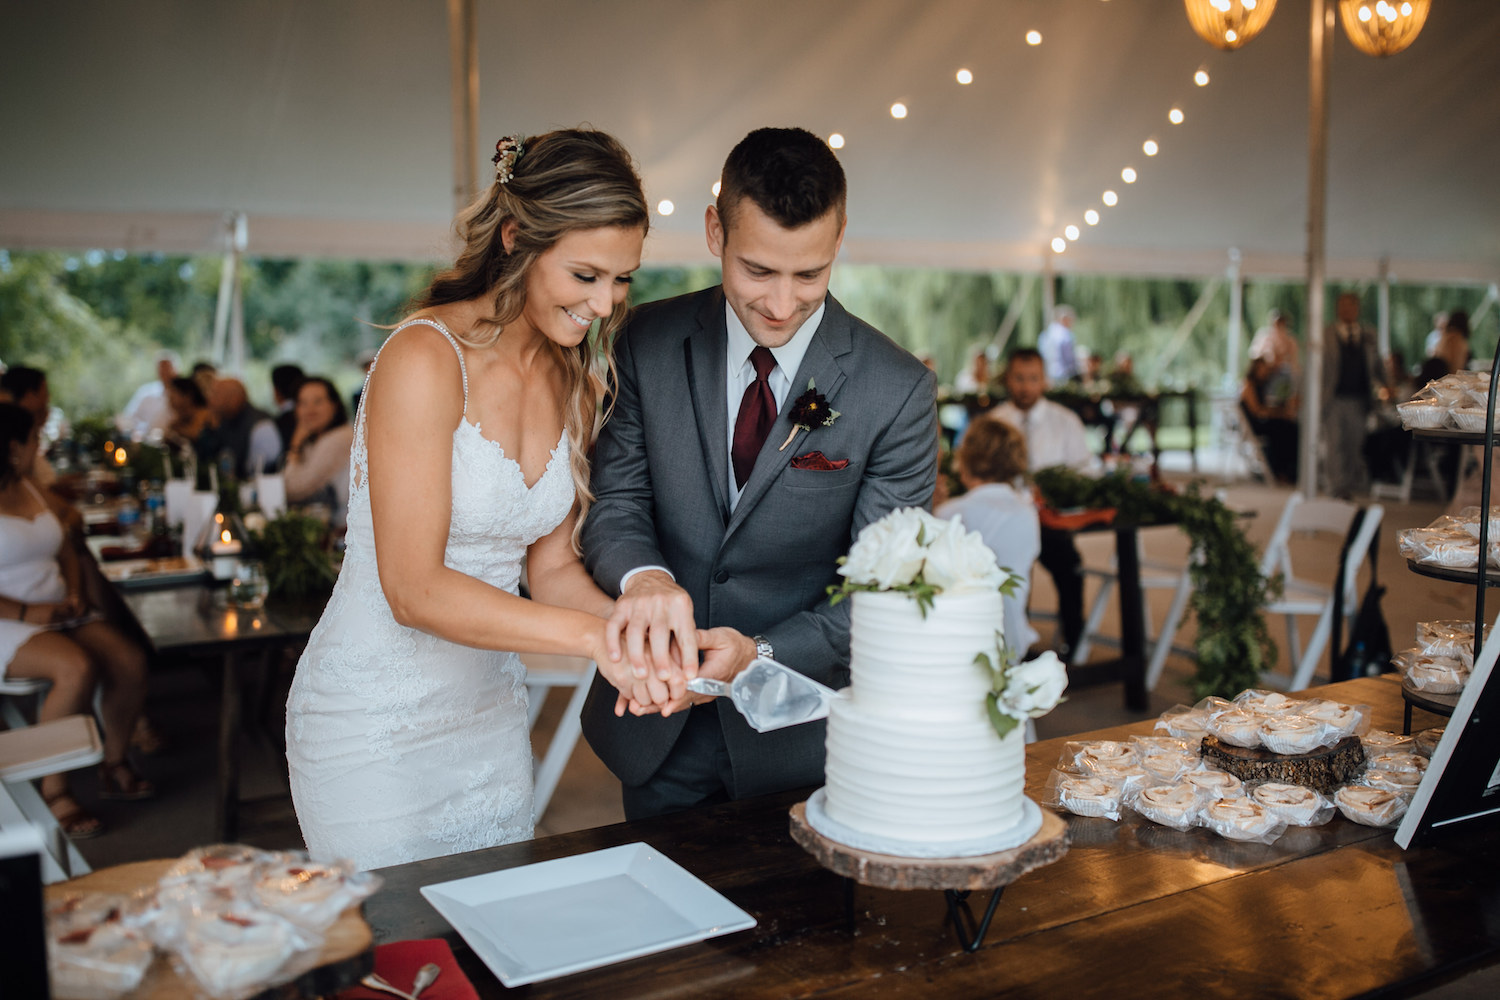 Bride and groom cutting cake at their aurora cellars wedding